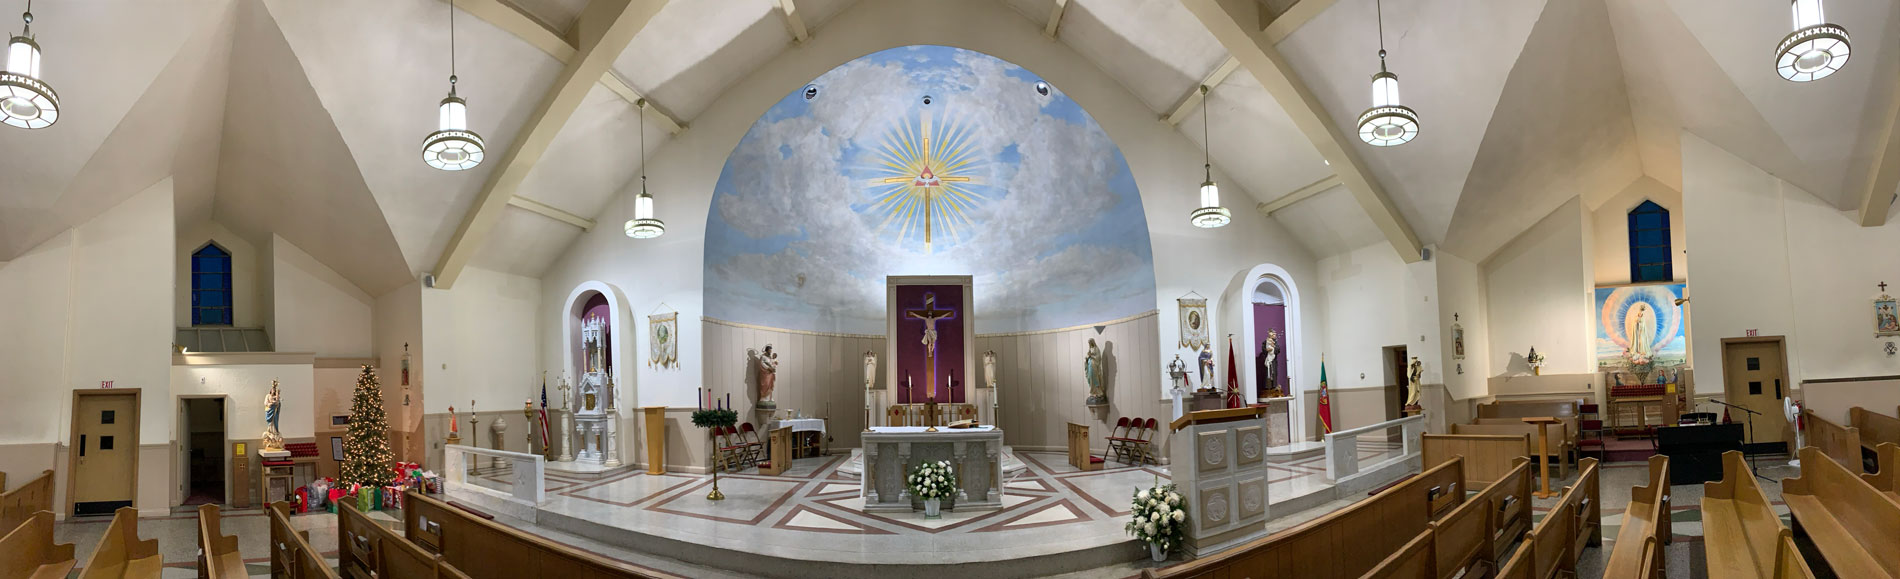 church altar image